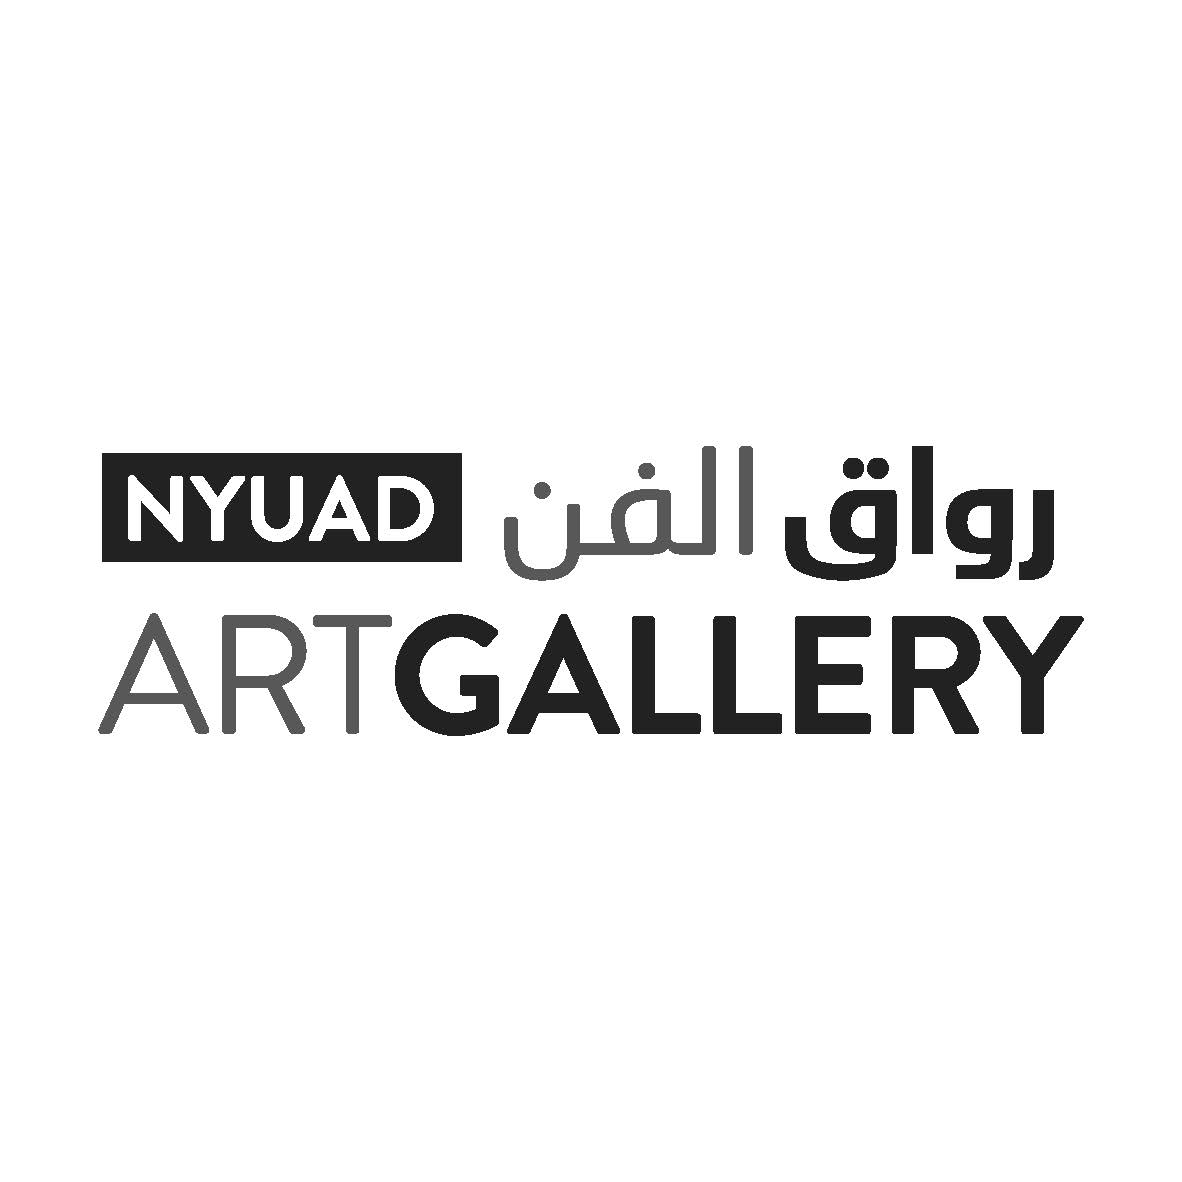 NYUAD Art Gallery